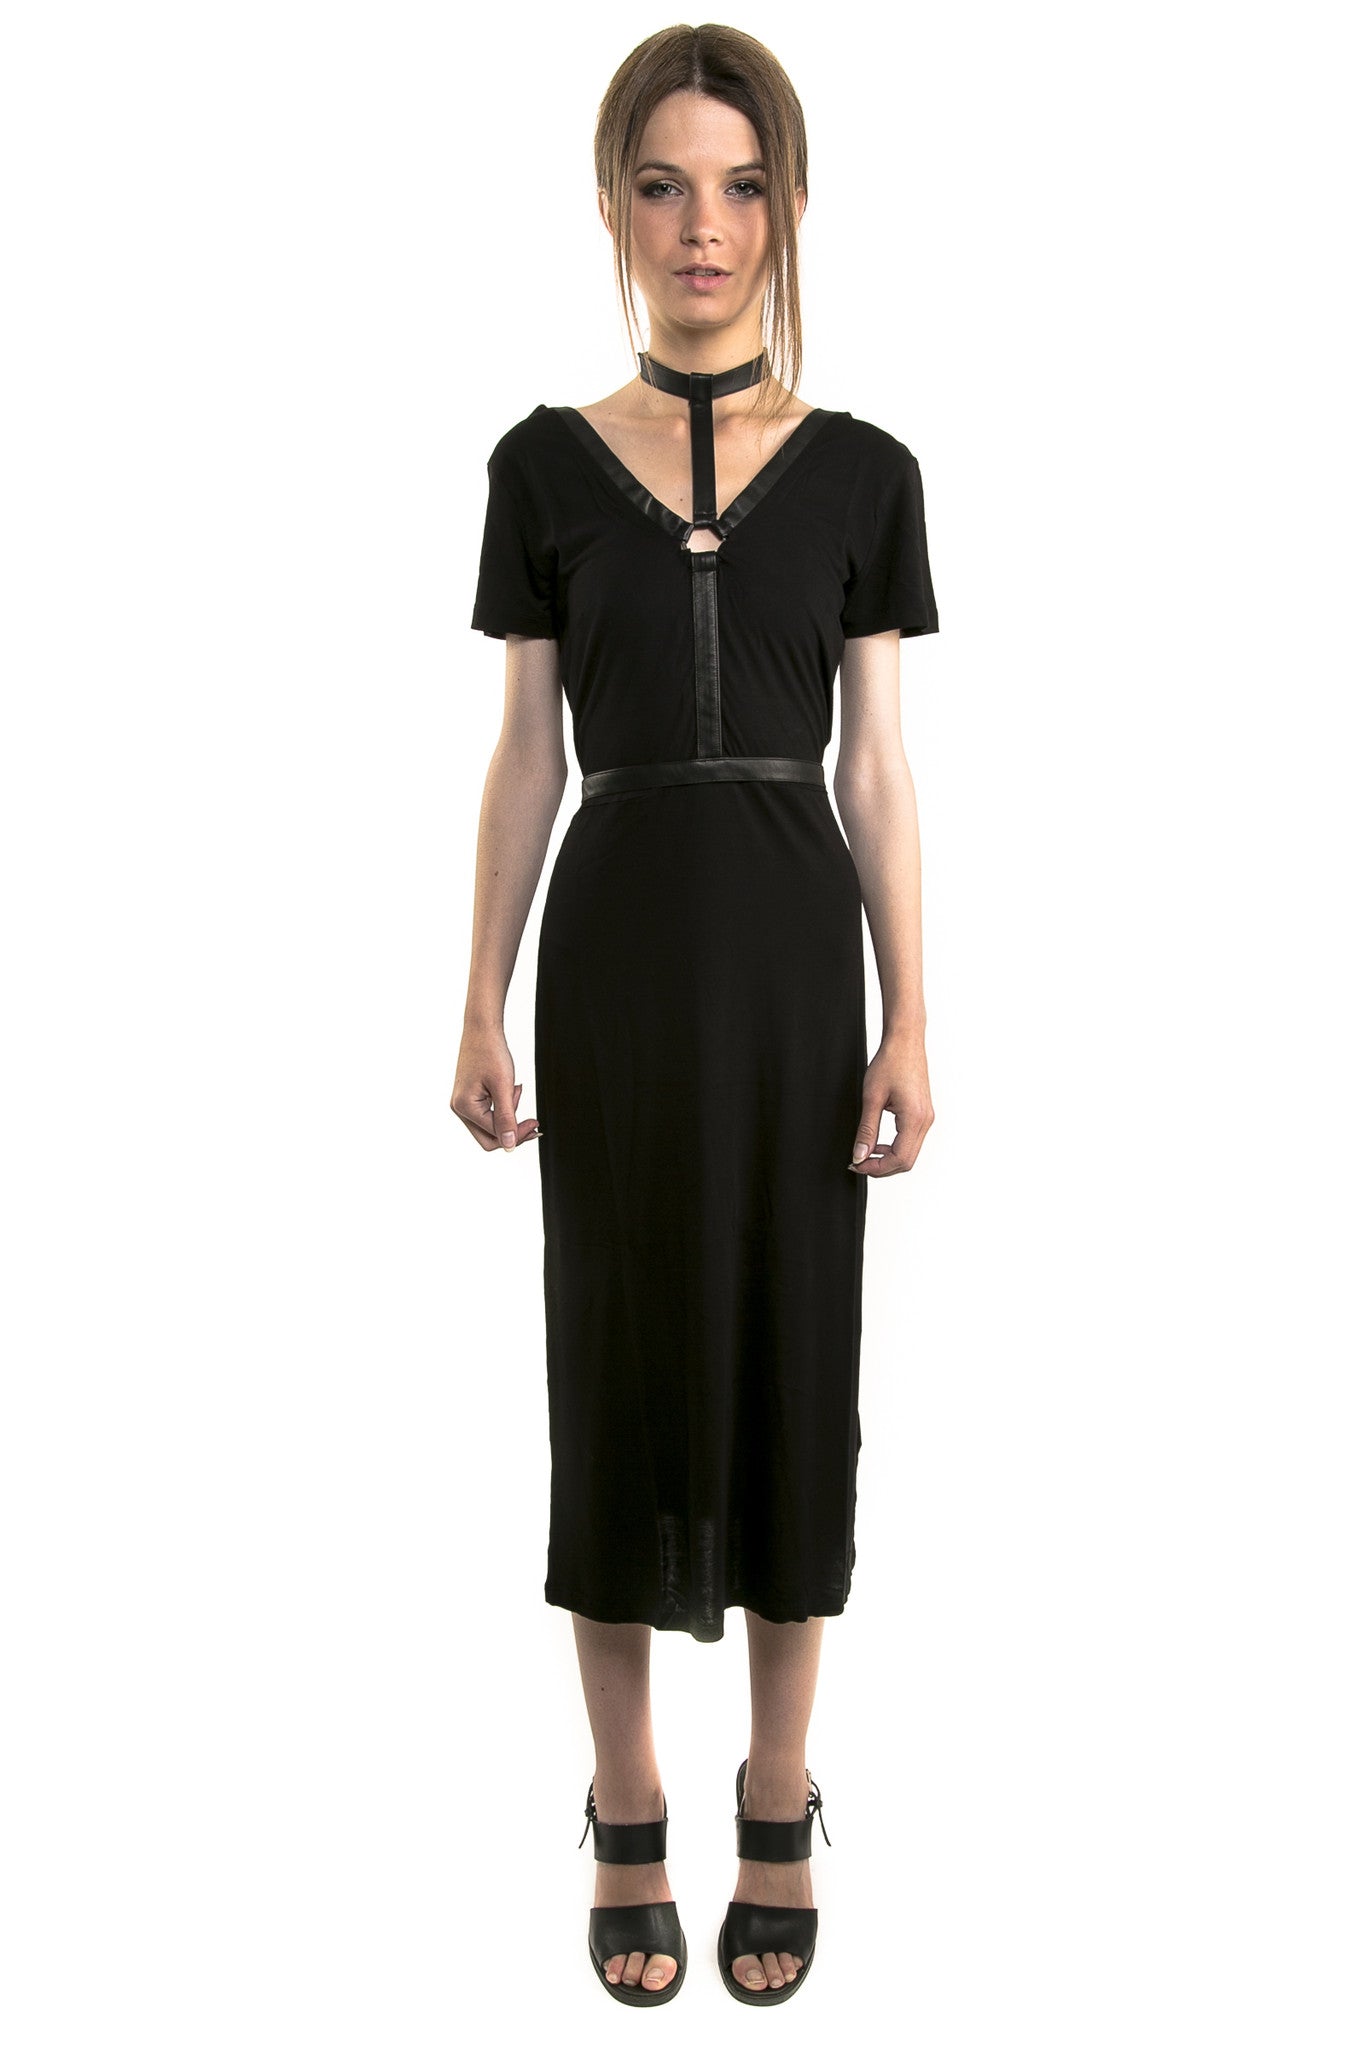 Choke Dress | Skinny Bitch Apparel, Clothing for Urban Trendsetters.